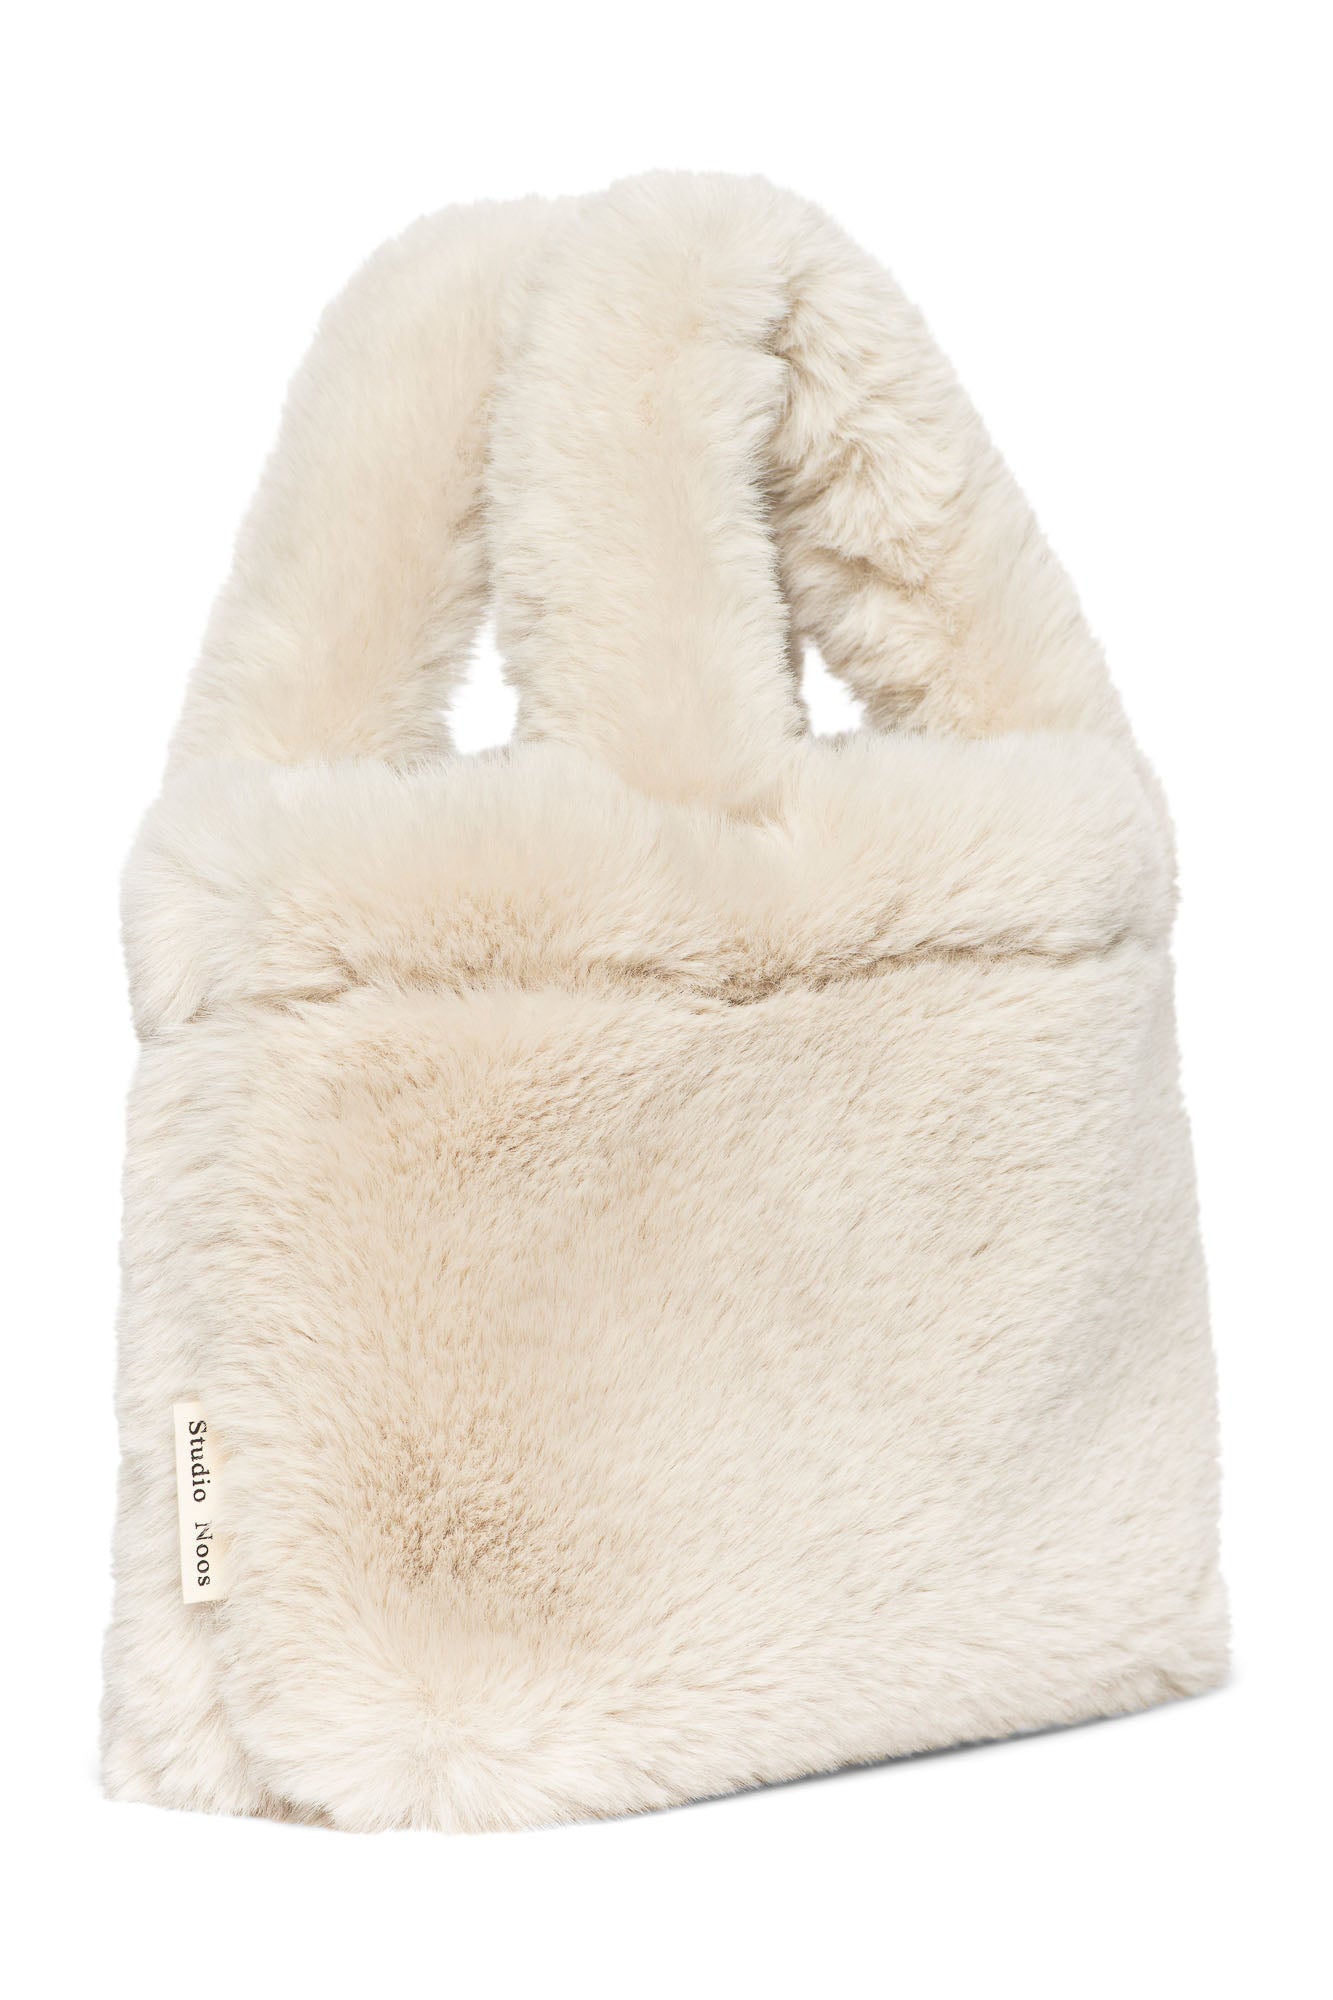 Buy Topgifties Stylish Faux Fur Sling Bag | Crossbody Sling Bag for Girls |  Black Pink Fur Sling Bag For Girls | Latest Trend Party Wear Sling bag with  Adjustable Strap for